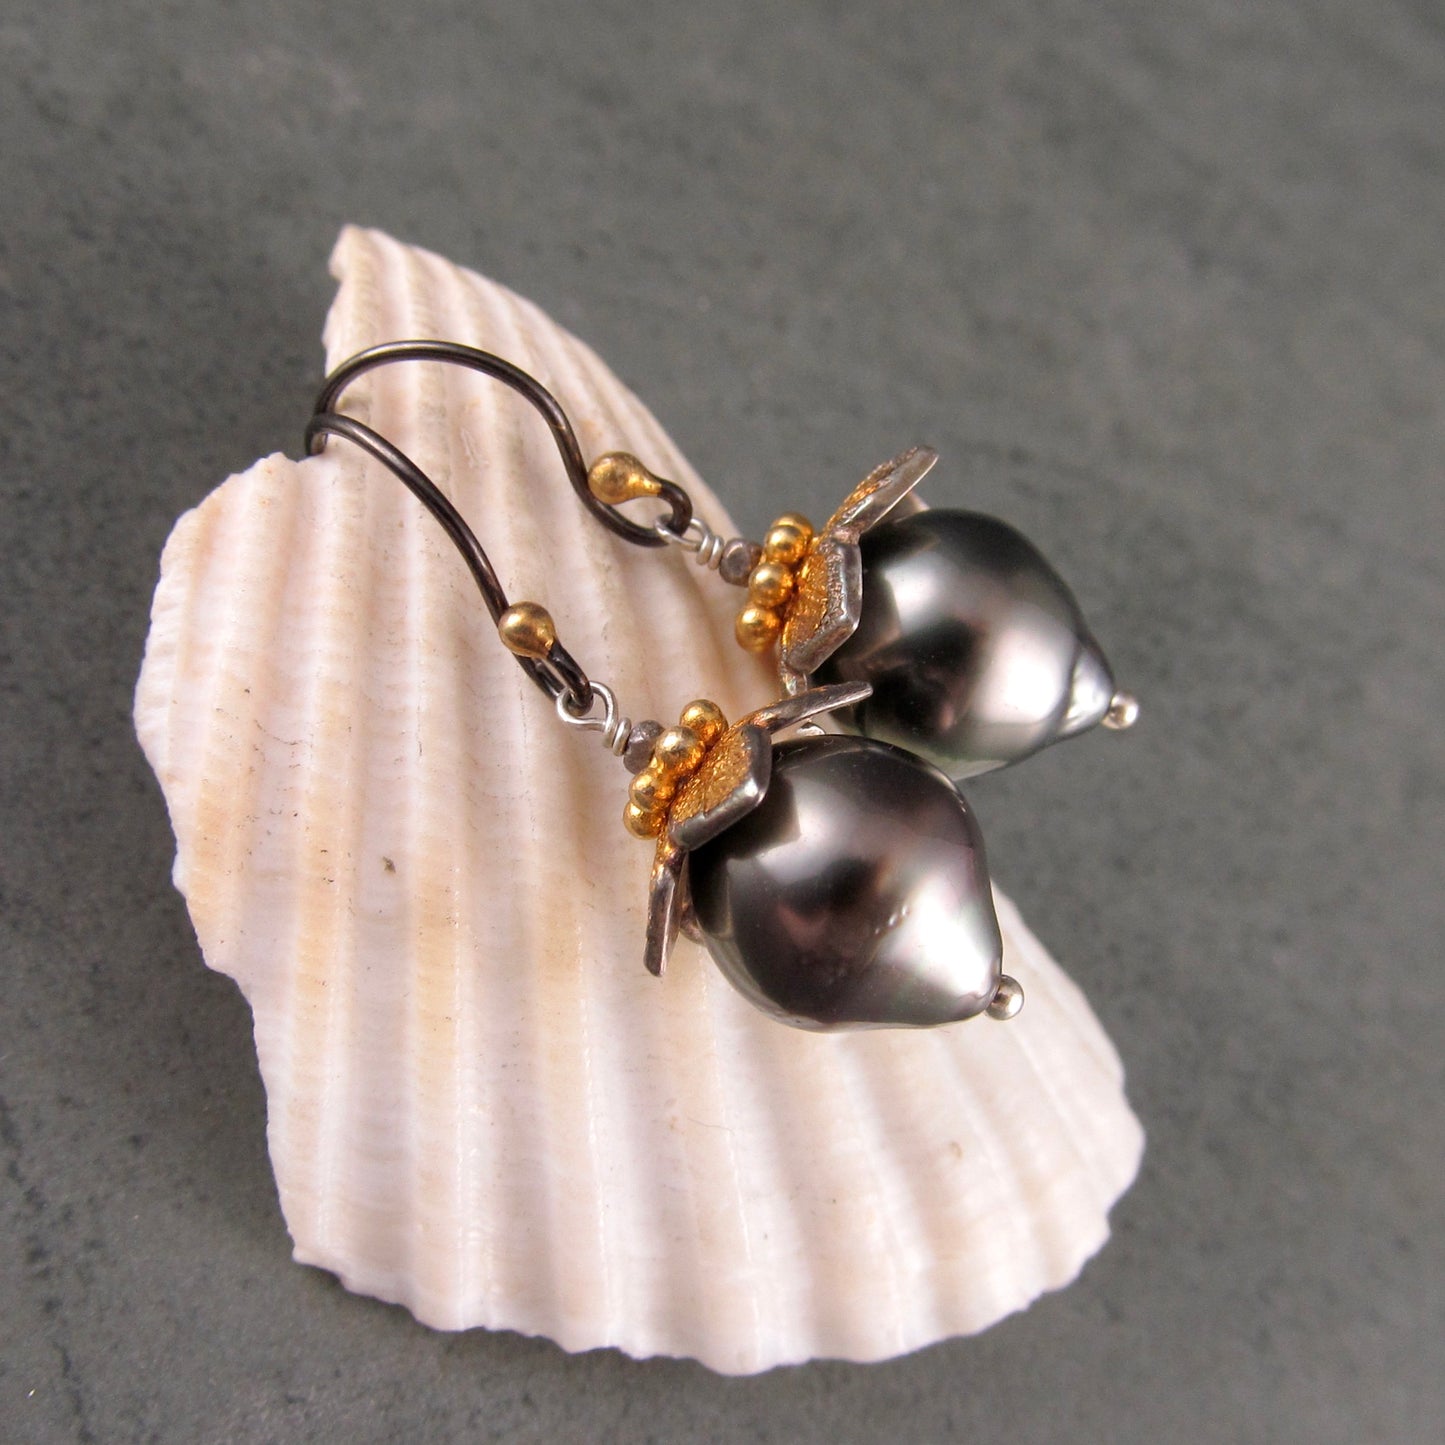 Tahitian pearl flower bud earrings in fine silver and 22k gold